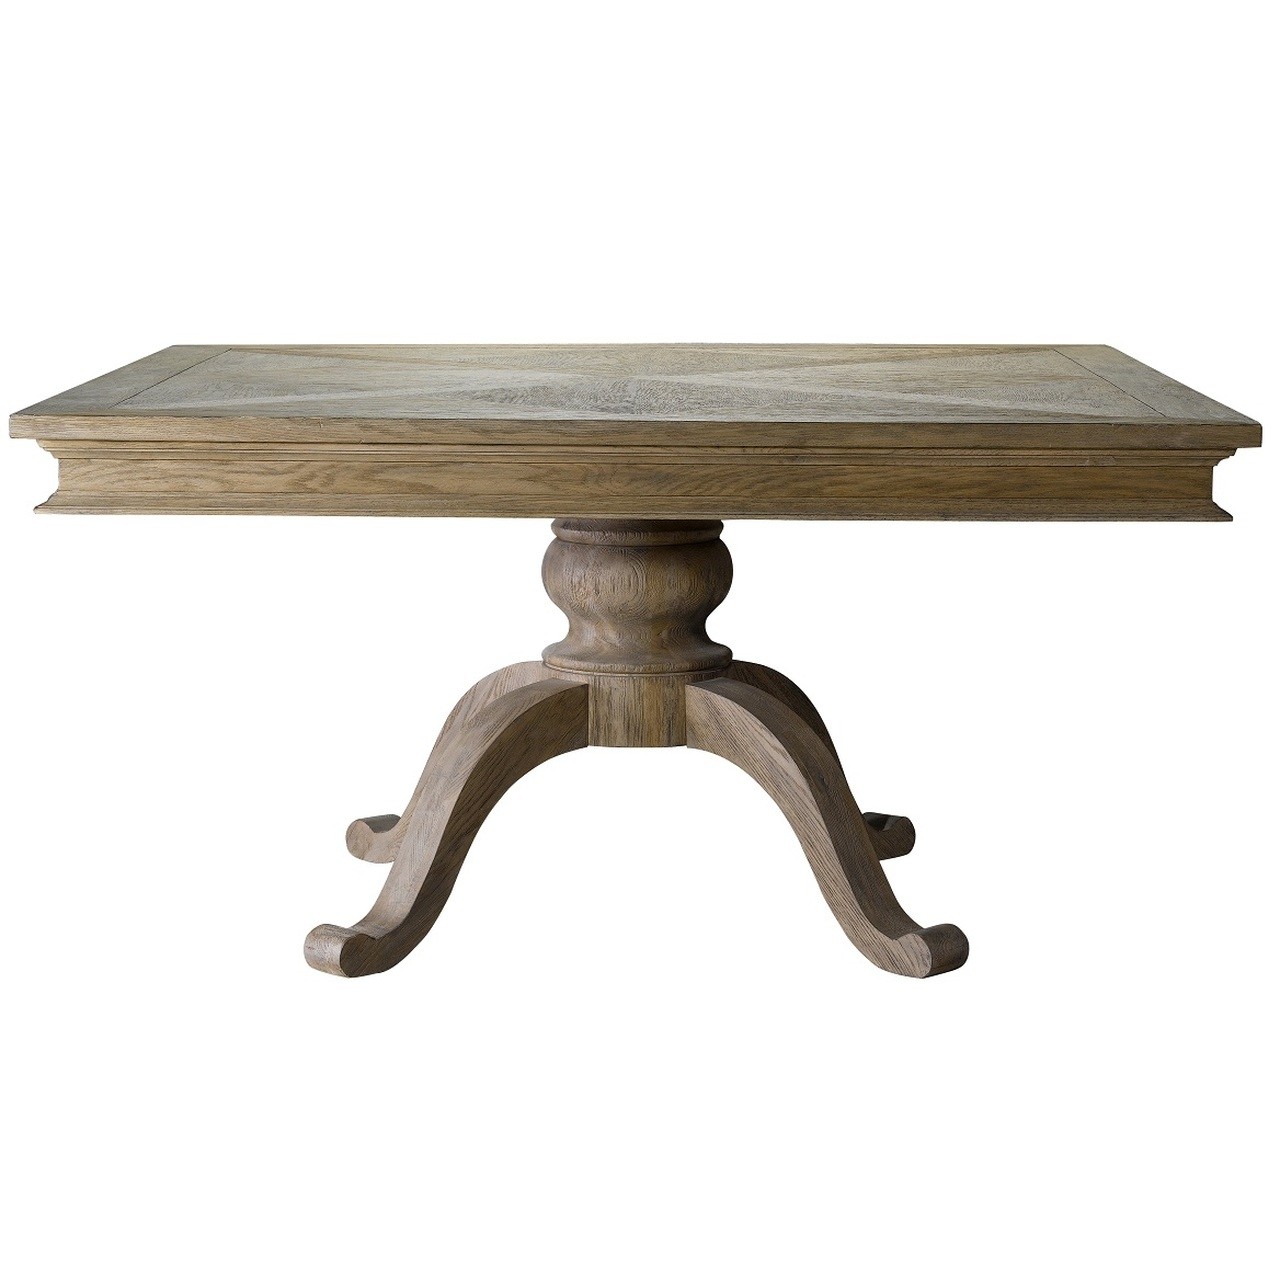 Geneva oak wood square pedestal dining table 47 zin home